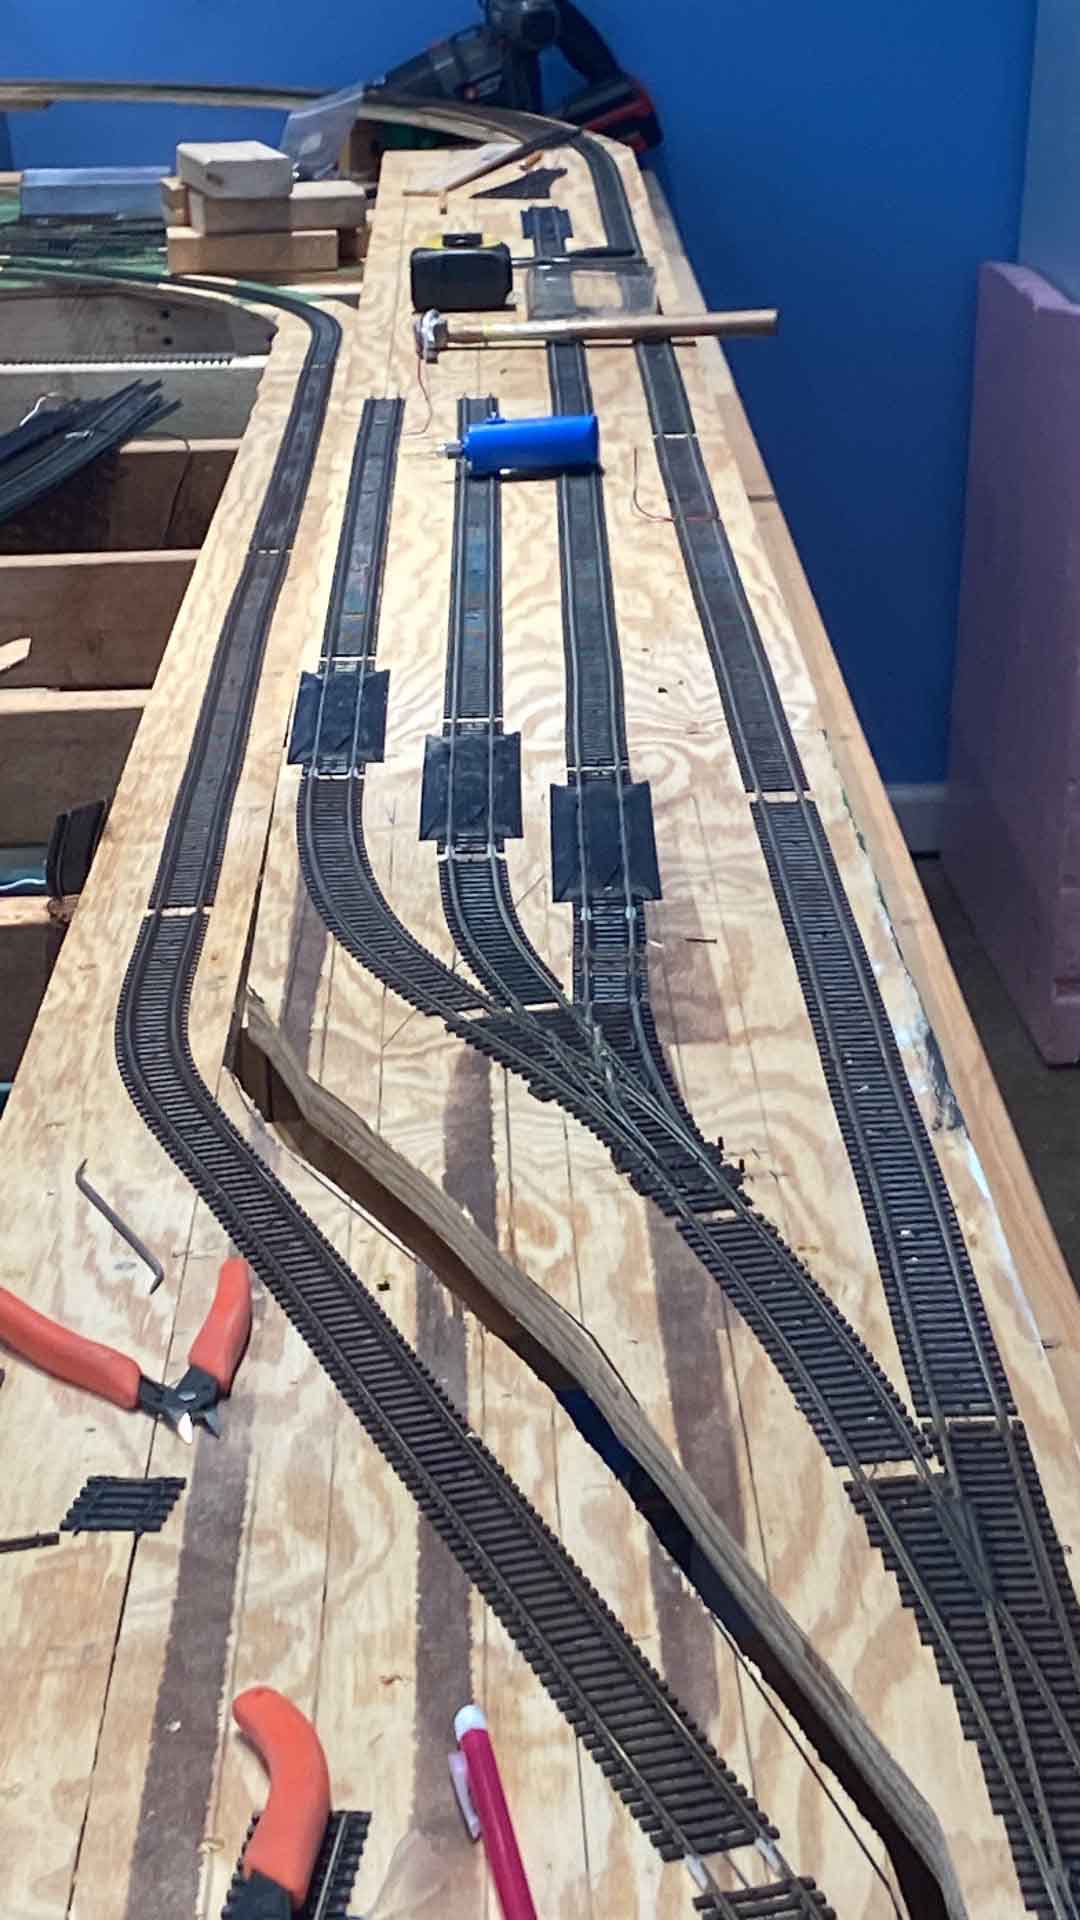 17x17 train layout sidings model railroad